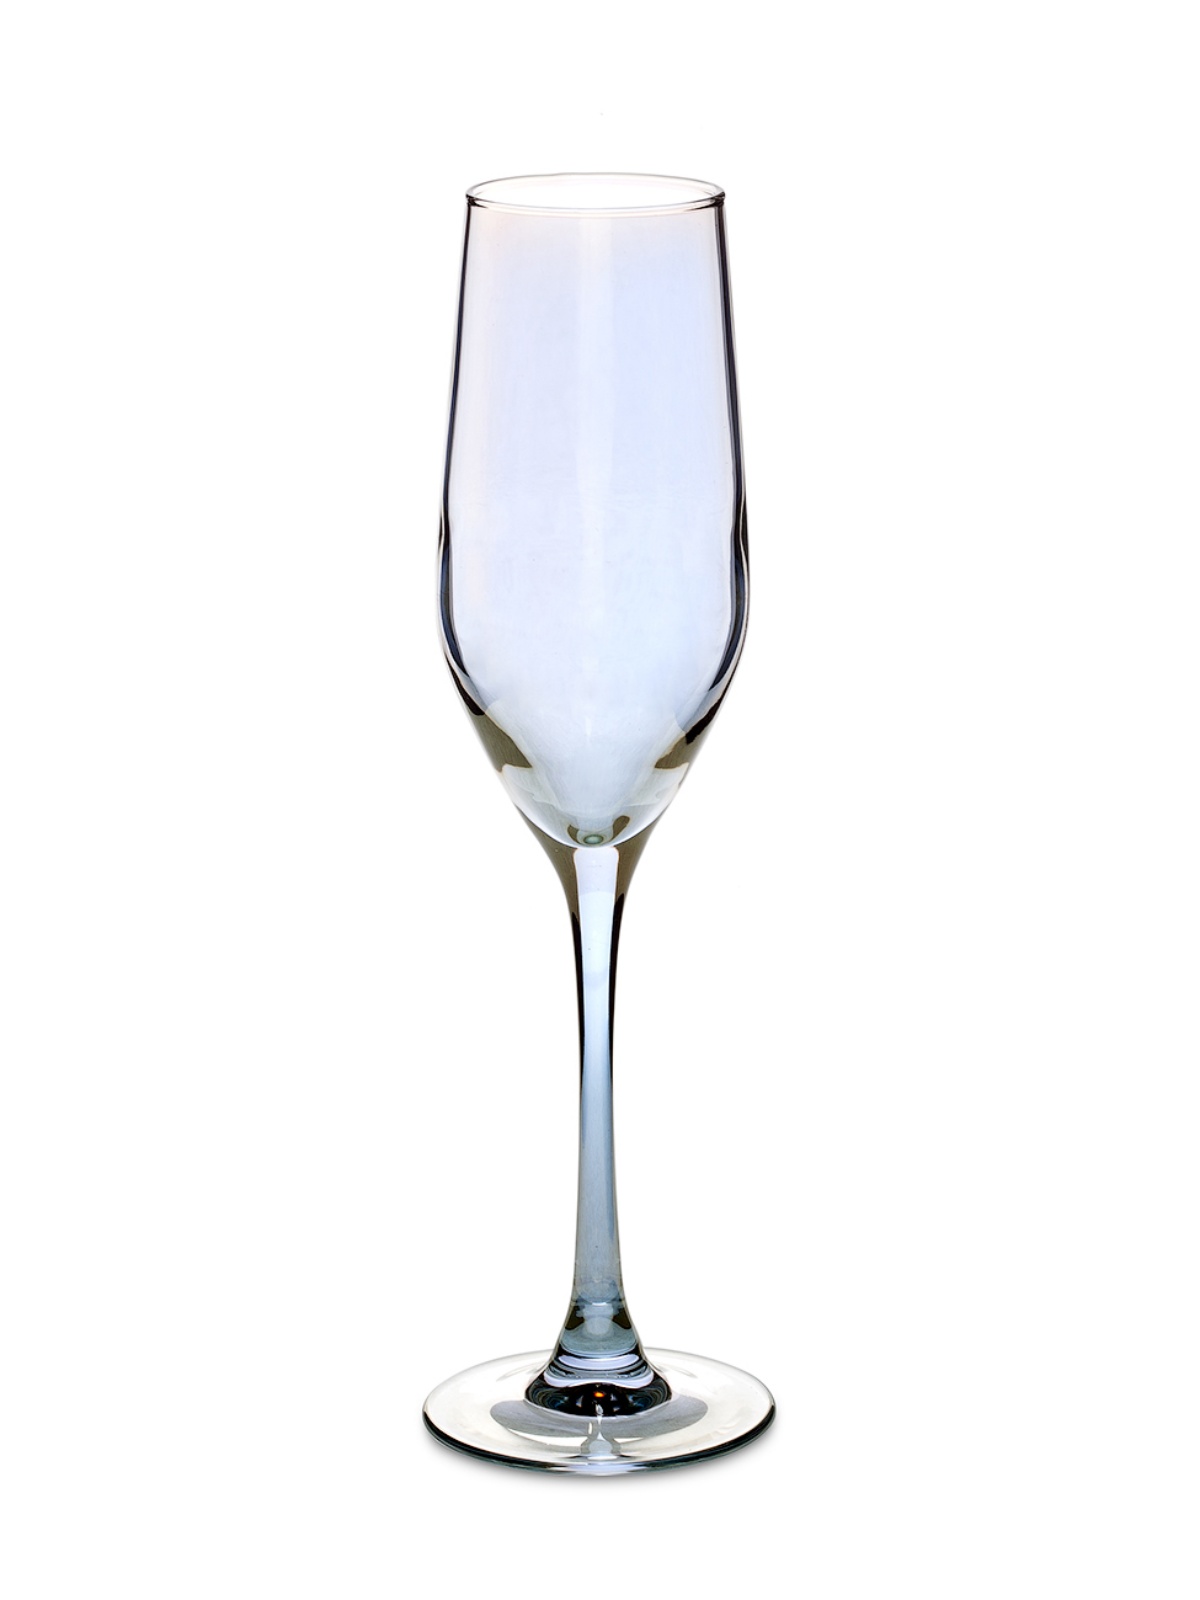 Набор бокалов для шампанского СЕЛЕСТ ЗОЛОТИСТЫЙ ХАМЕЛЕОН 6шт 160мл LUMINARC P1636 бокал для шампанского luminarc селест сияющий графит p1564 6шт 160мл